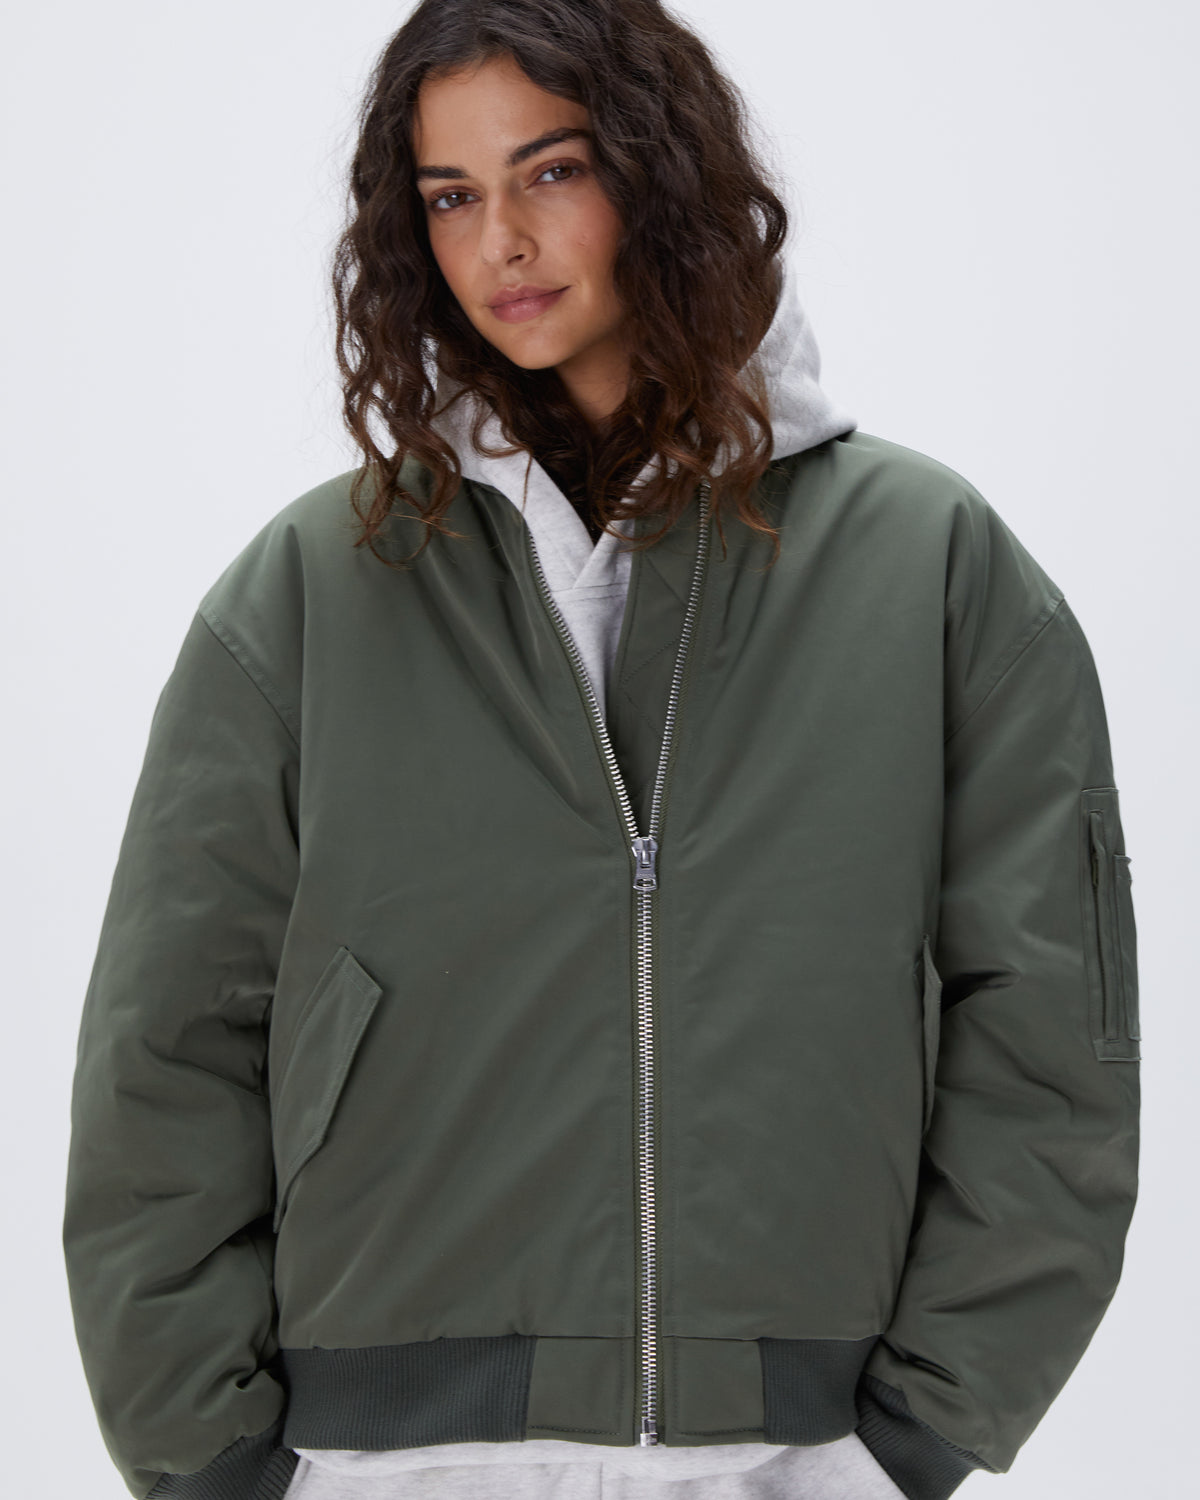 Women's Khaki Green Bomber Jacket | Adanola